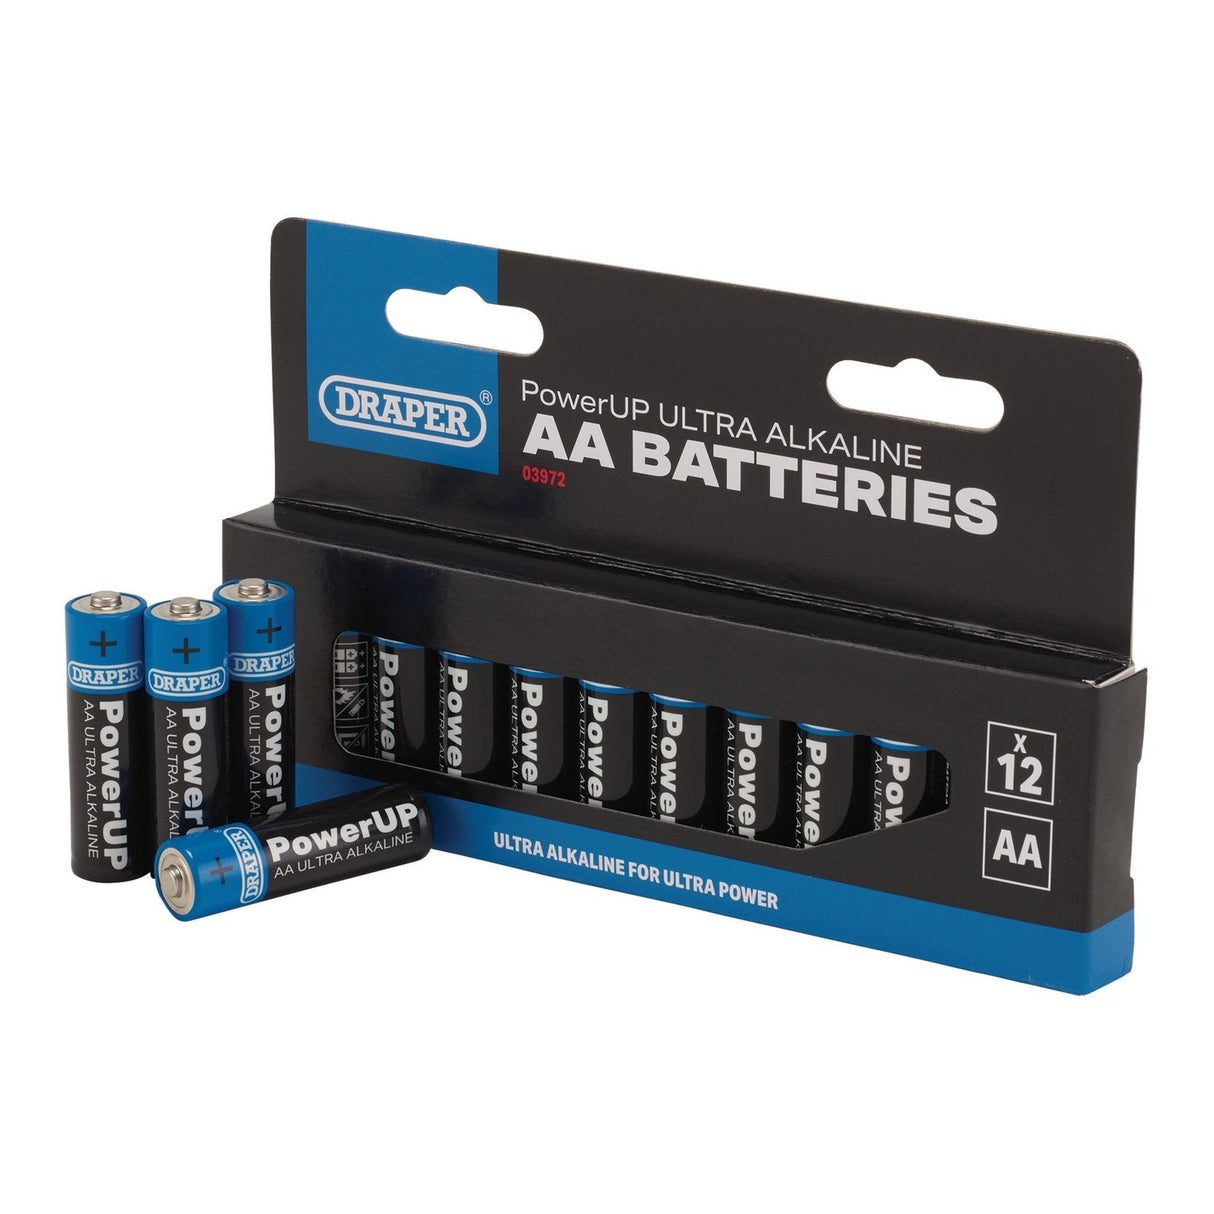 Draper Powerup Ultra Alkaline Aa Batteries (Pack Of 12) - BATT/AA/12 - Farming Parts